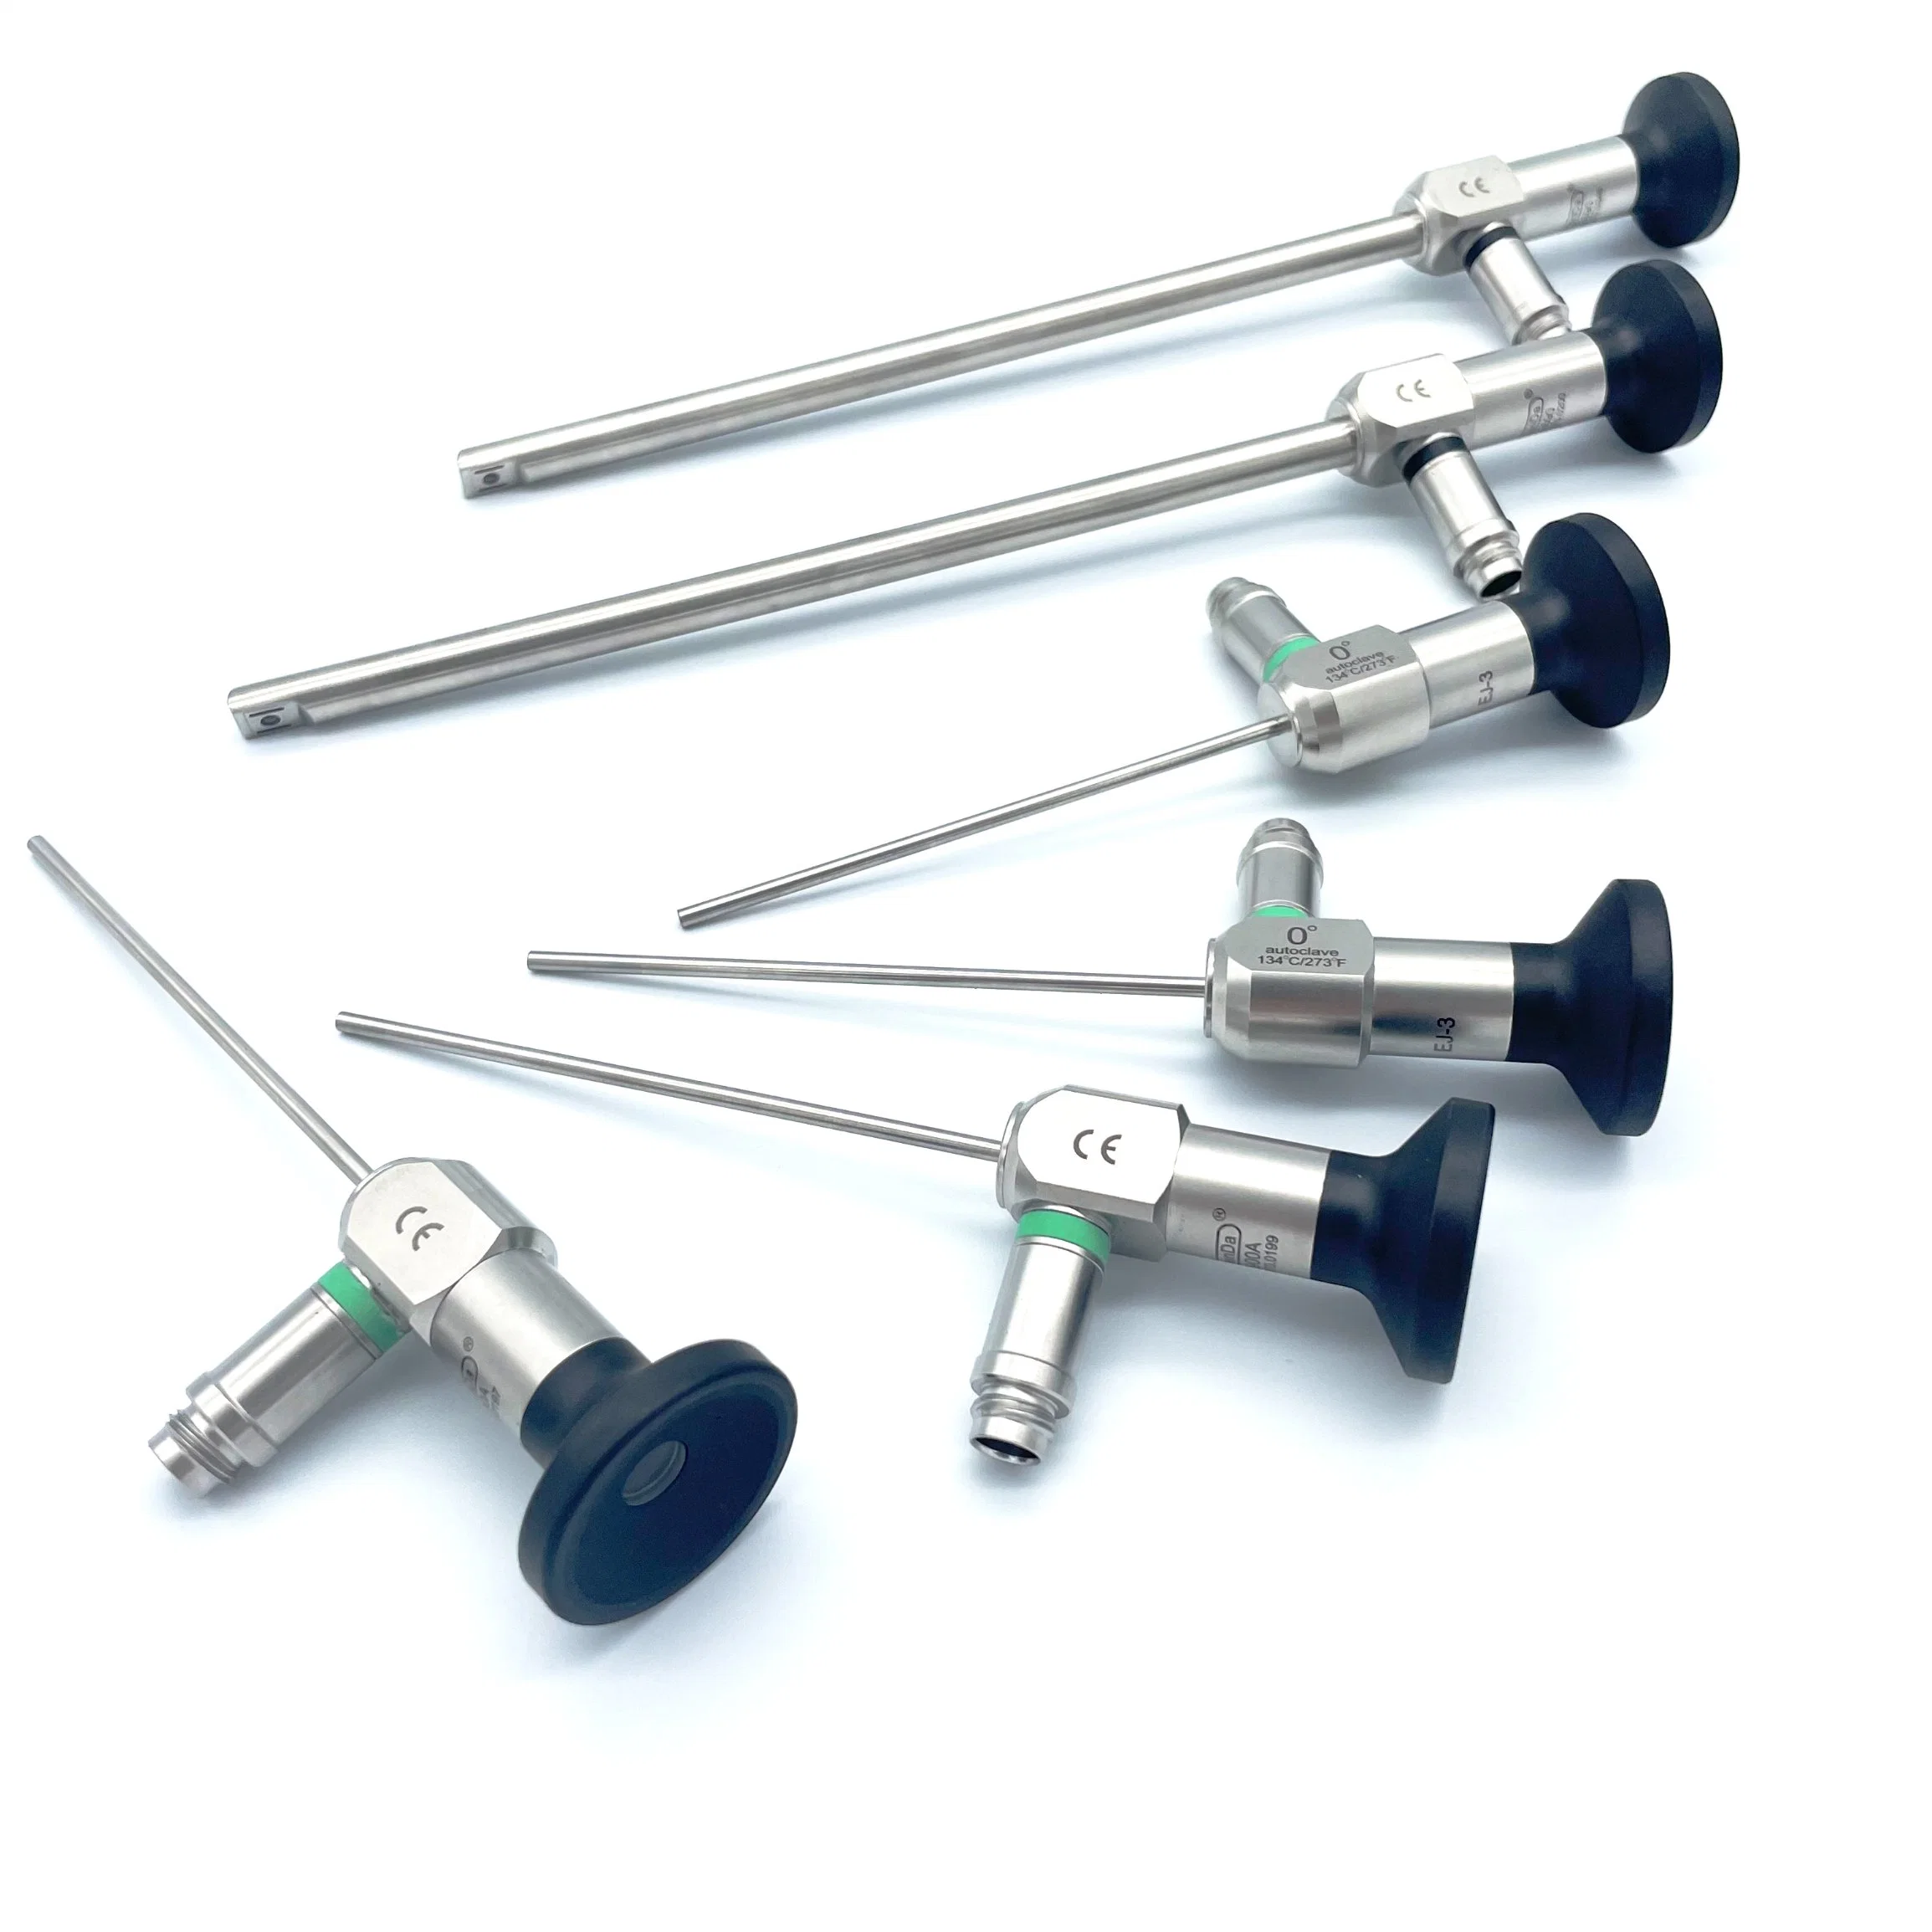 0/30/70 Degree 2.7mm 3mm 4mm Otoscope Set Medical Ear Otoscope Endoscope Ent Endoscope Instruments for Ent Eurgery